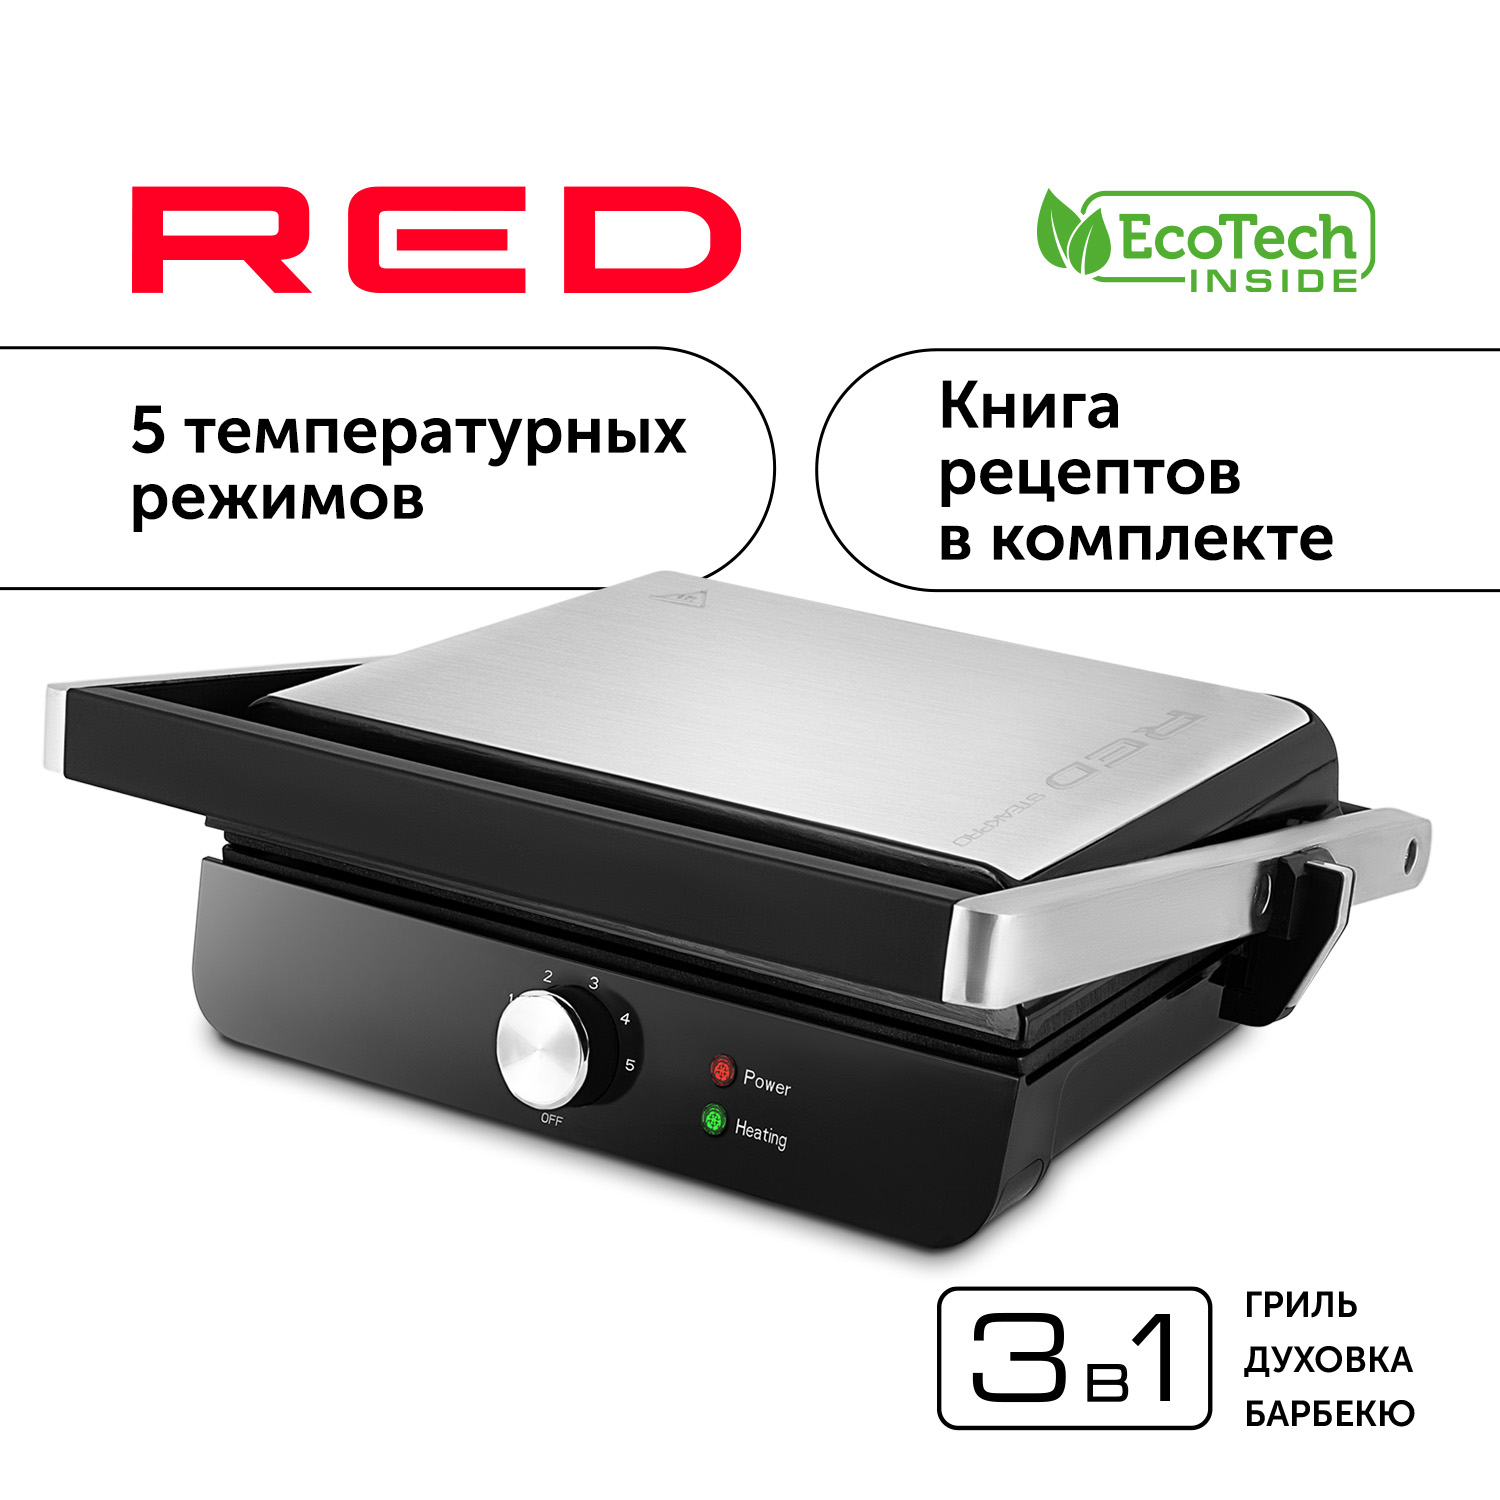 Гриль RED SOLUTION RGM-M815 серебристый, серый, черный